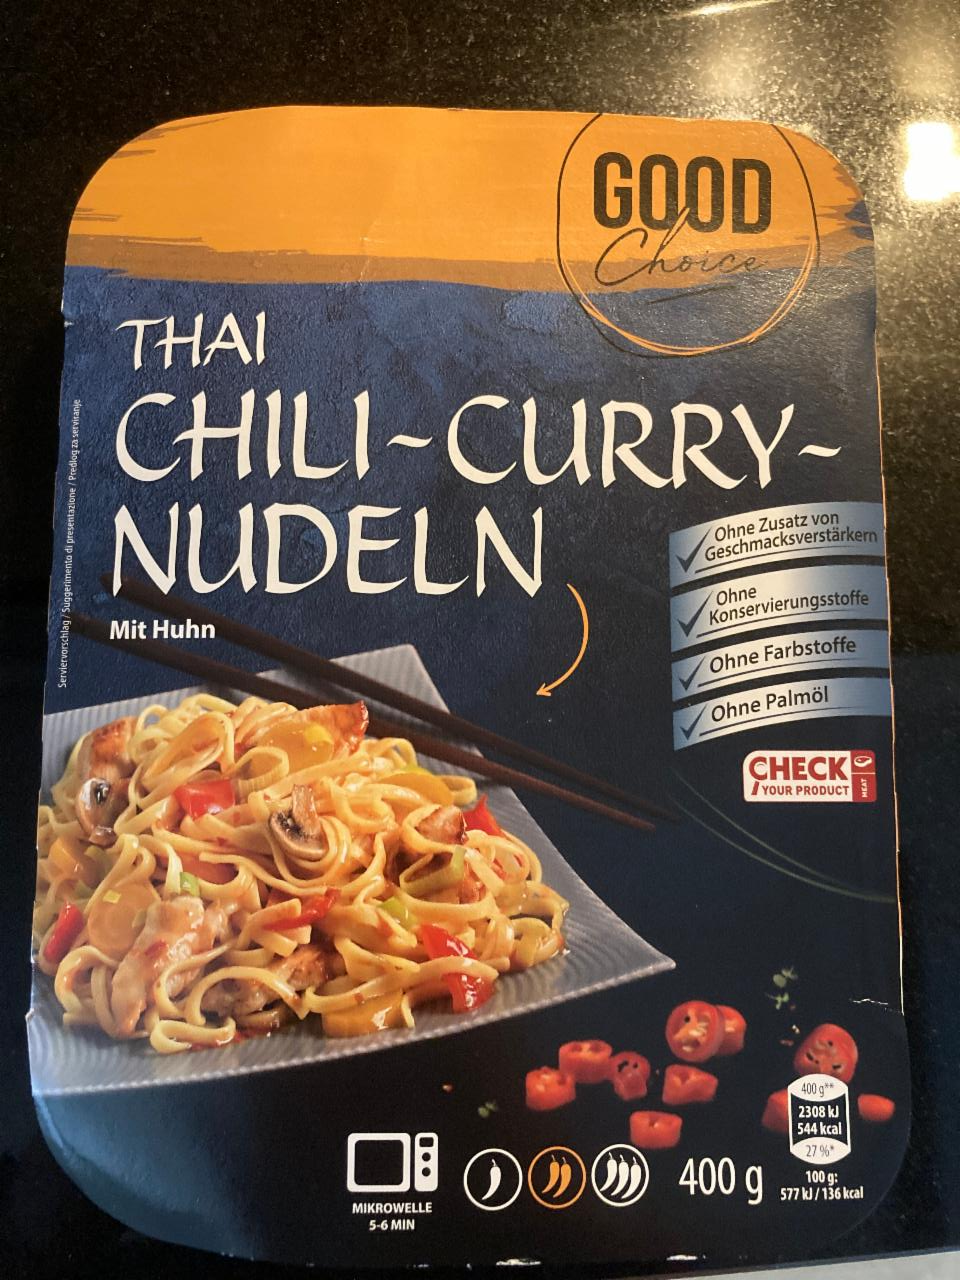 Fotografie - Thai chili-curry-nudeln mit huhn Good Choice